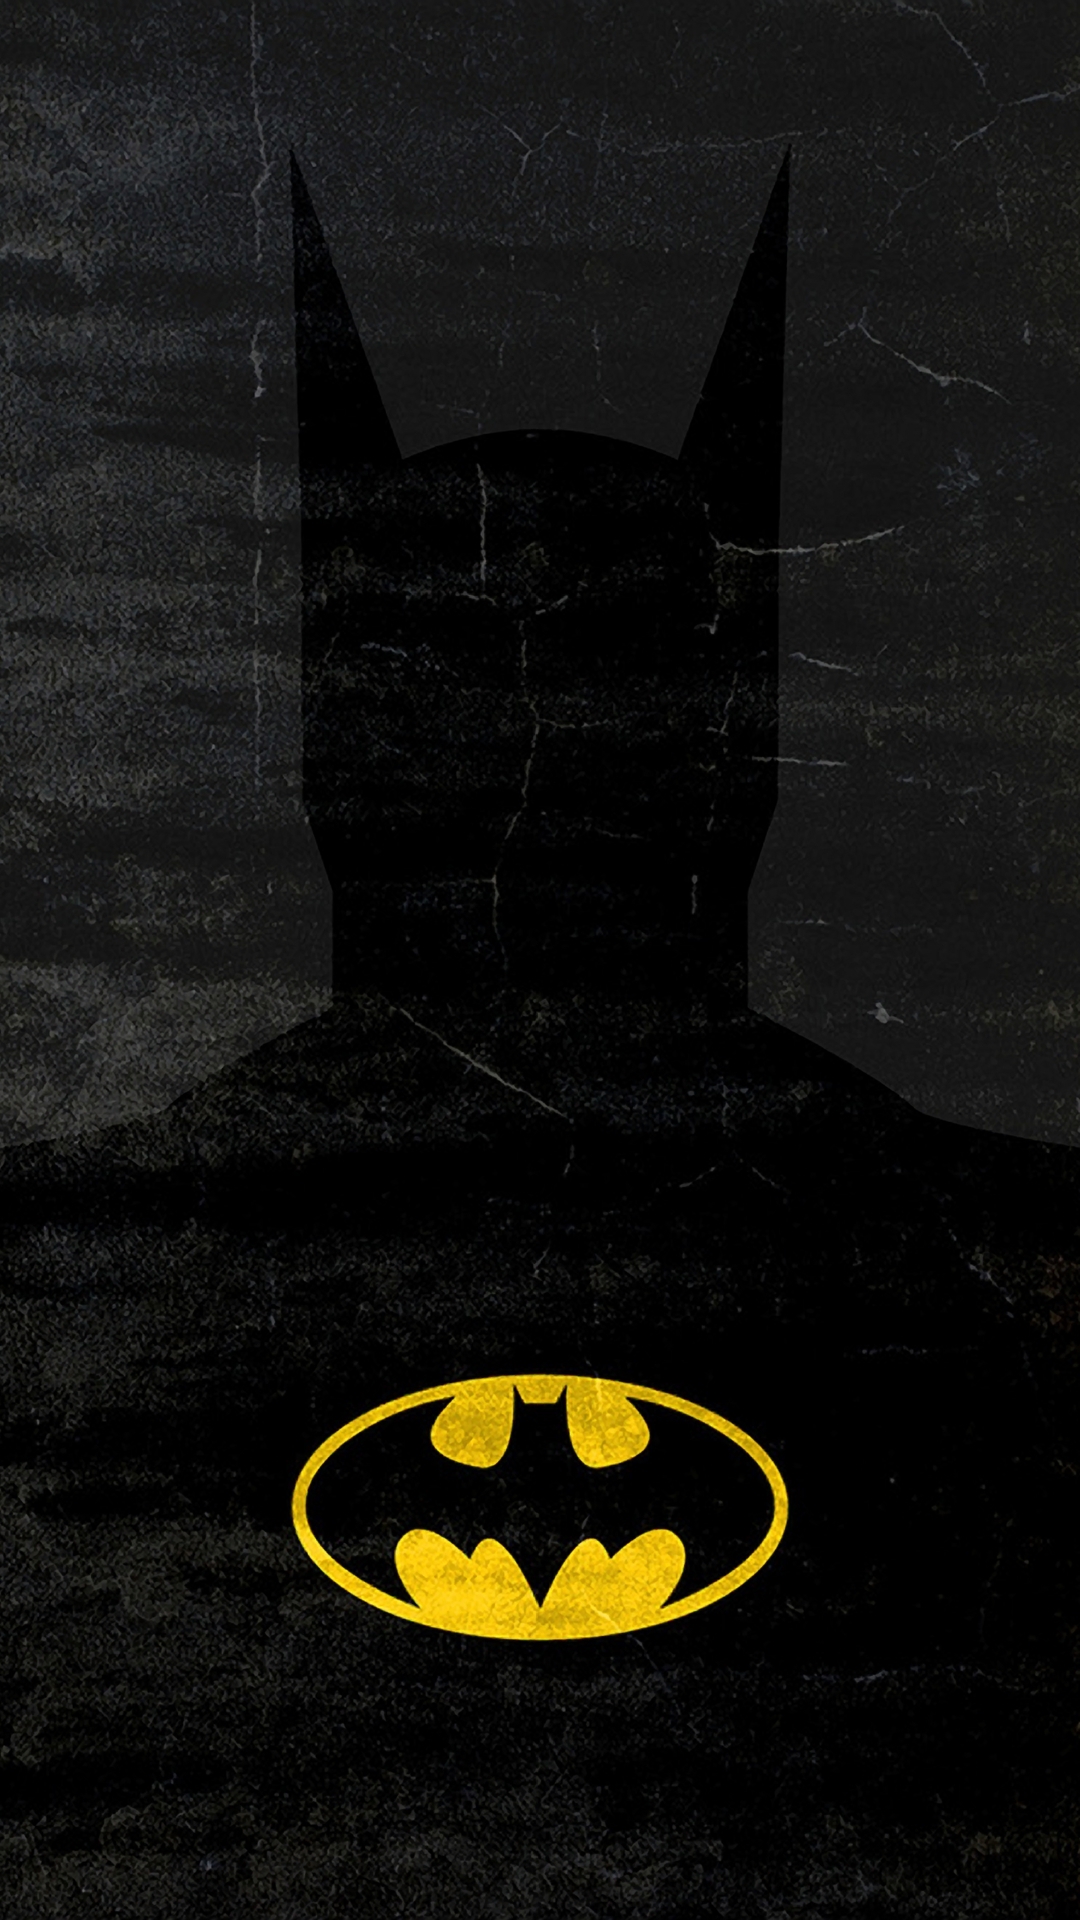 Batman wallpaper for android